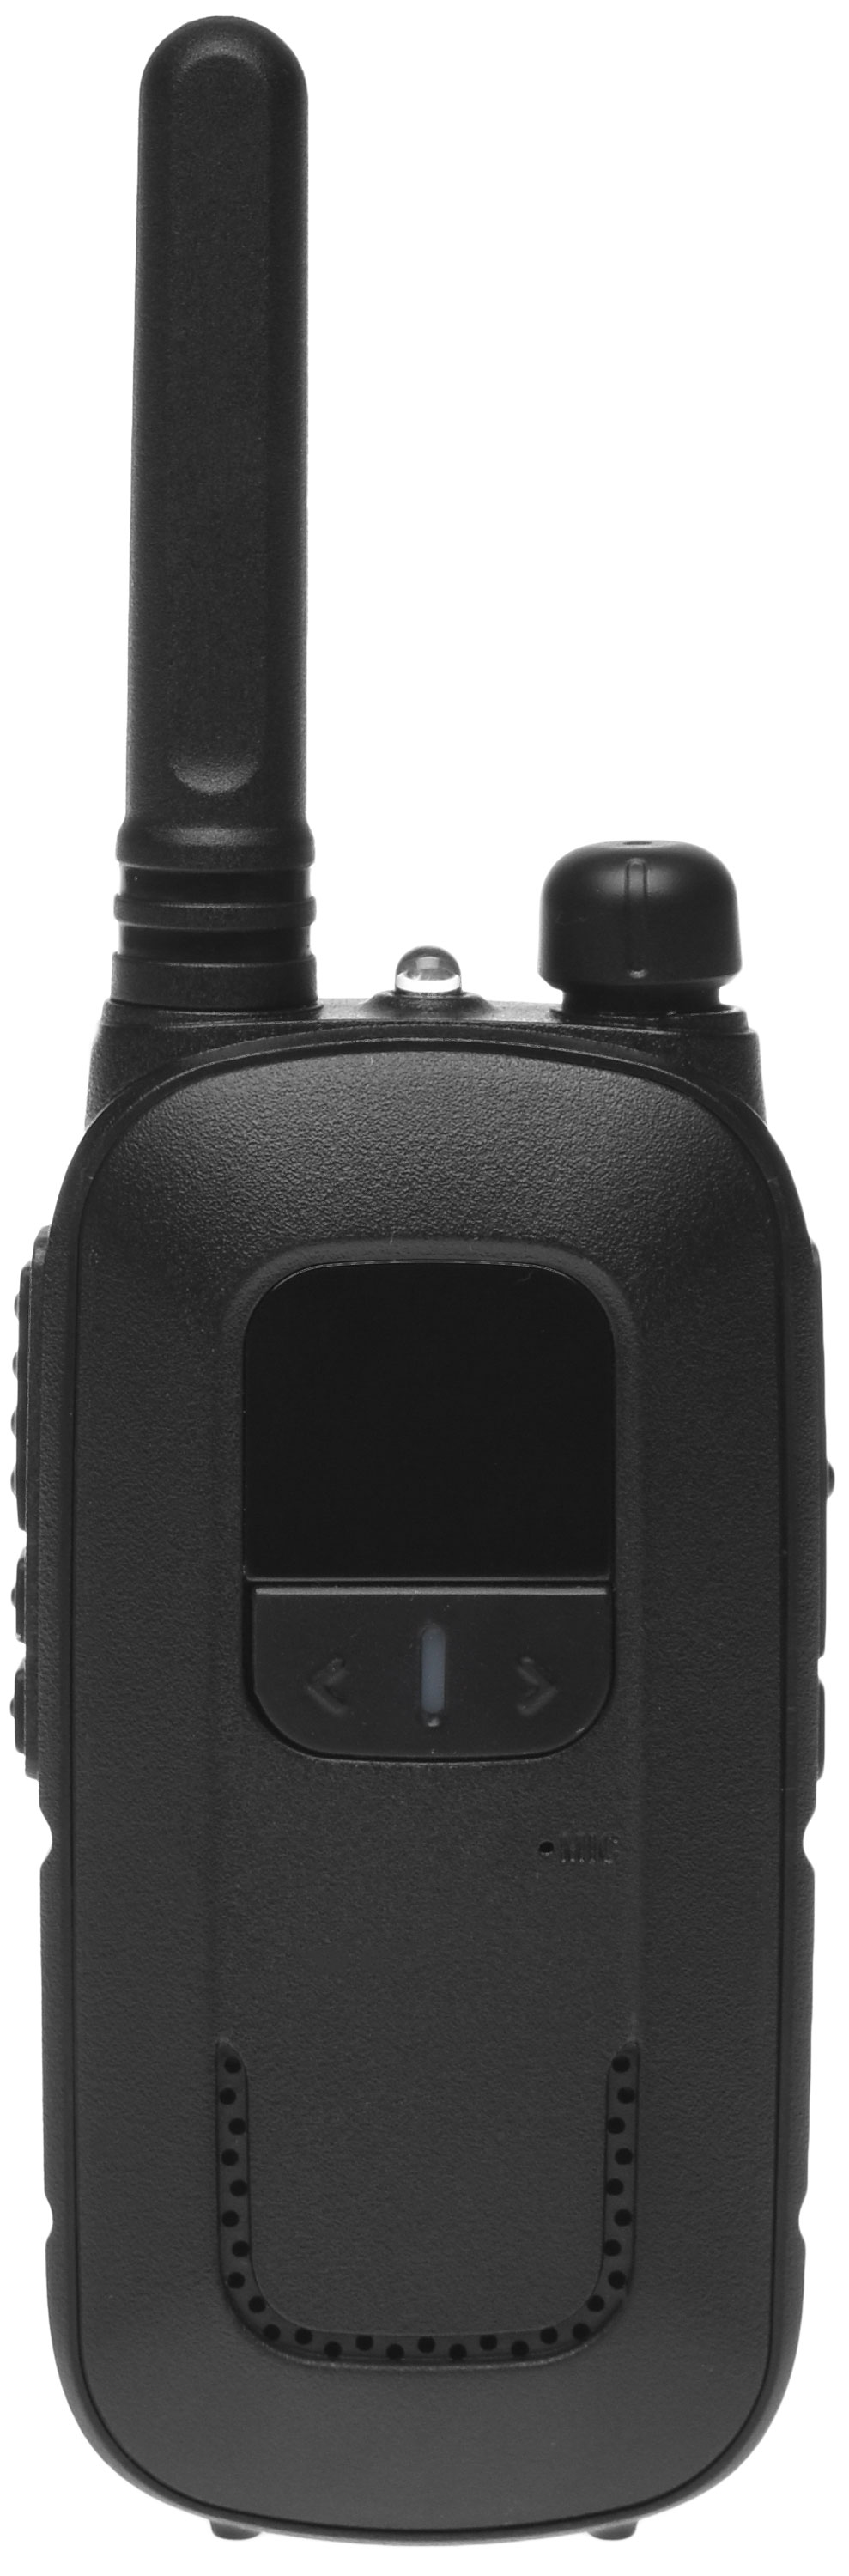 AGENT AR-T12 Black Portable Radio